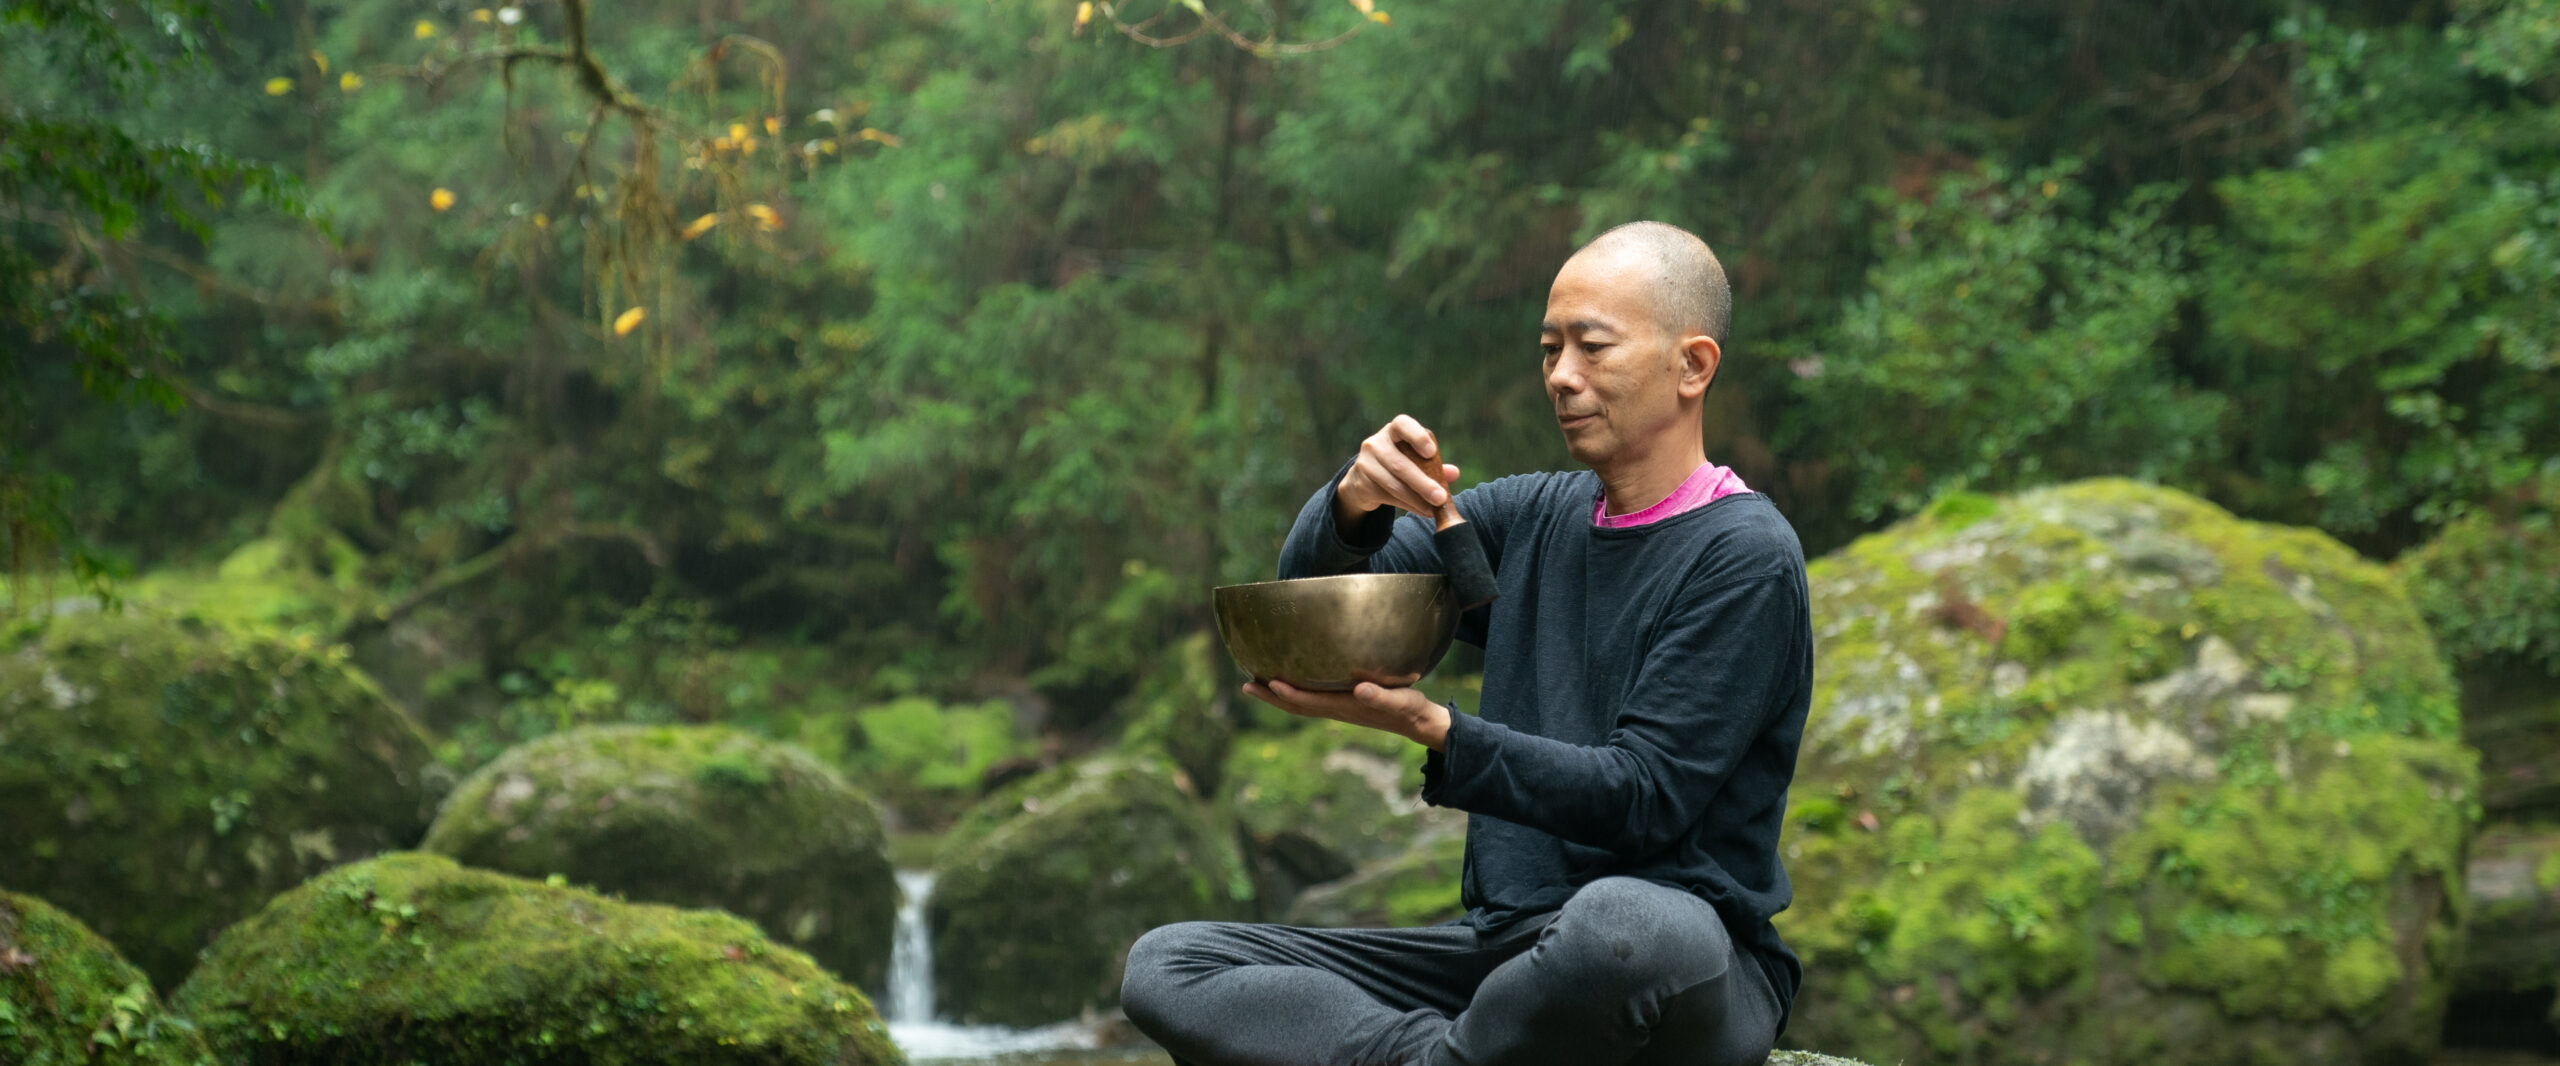 Ryoichi Higashi　シンギングボウル｜ヨガ｜瞑想｜アクセスバーズ｜カウンセリング・コーチング　実践者のサイト @逗子